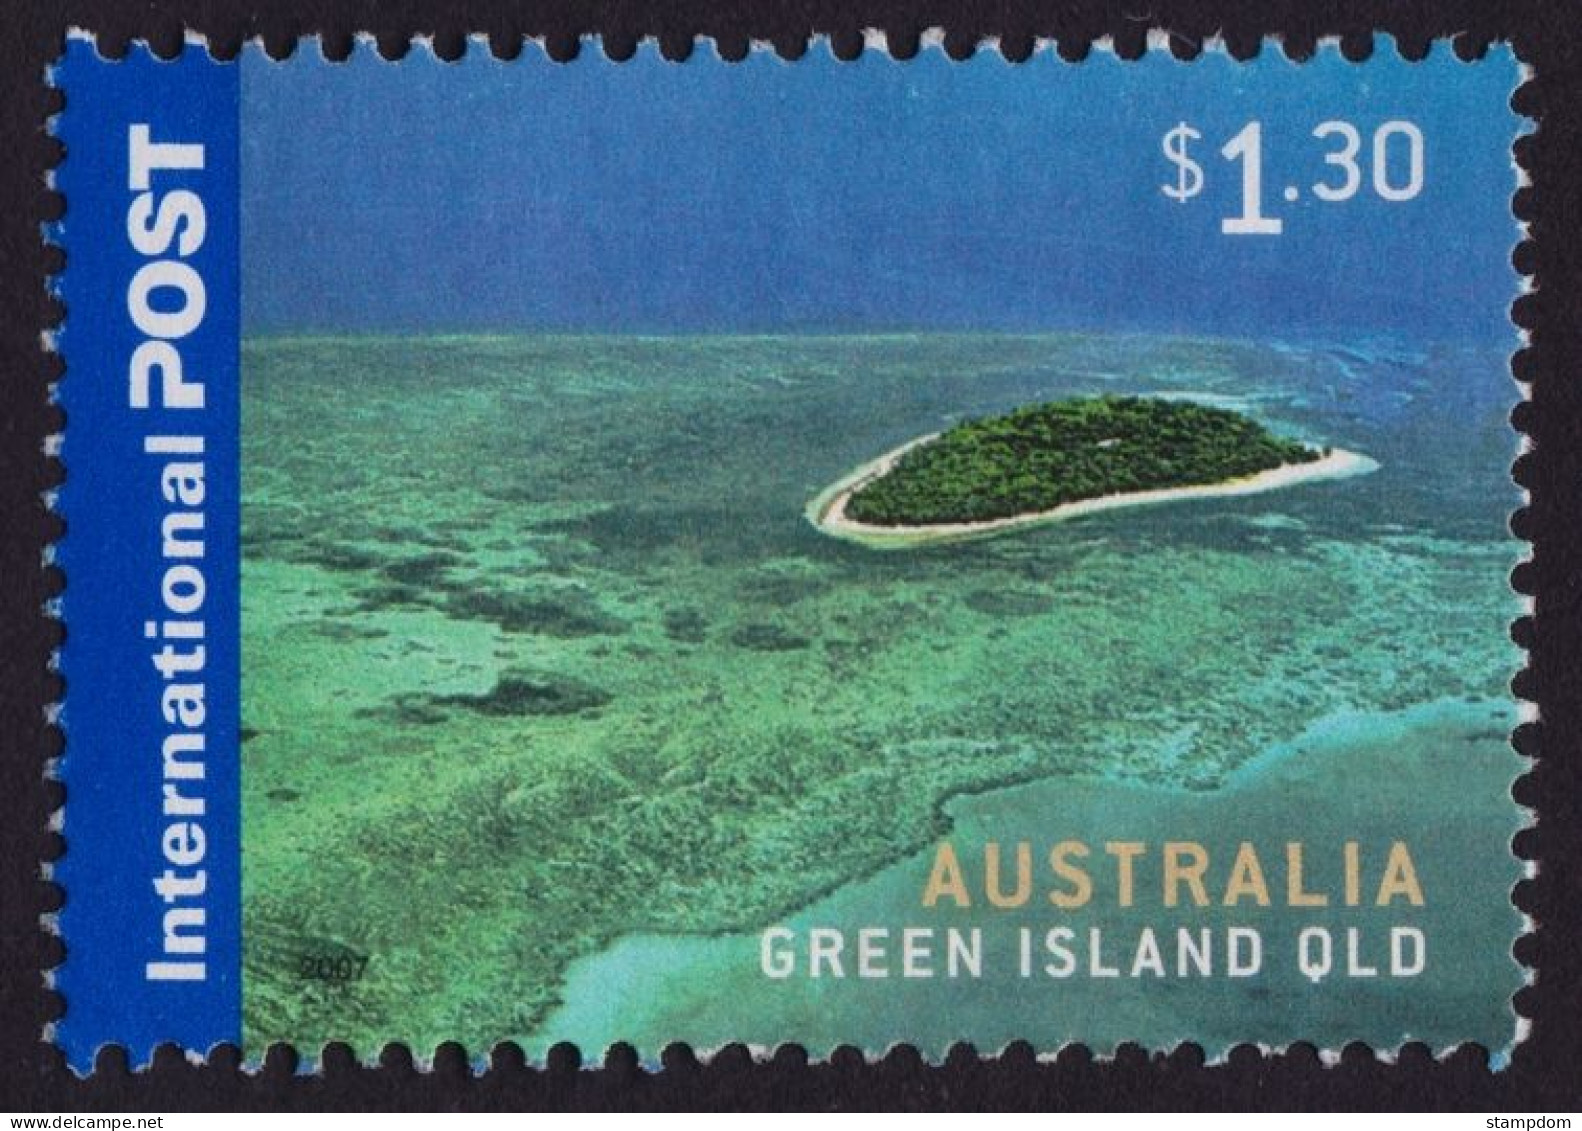 AUSTRALIA 2007 Islands $1.30 Green Island Sc#2629 USED @O425 - Usados